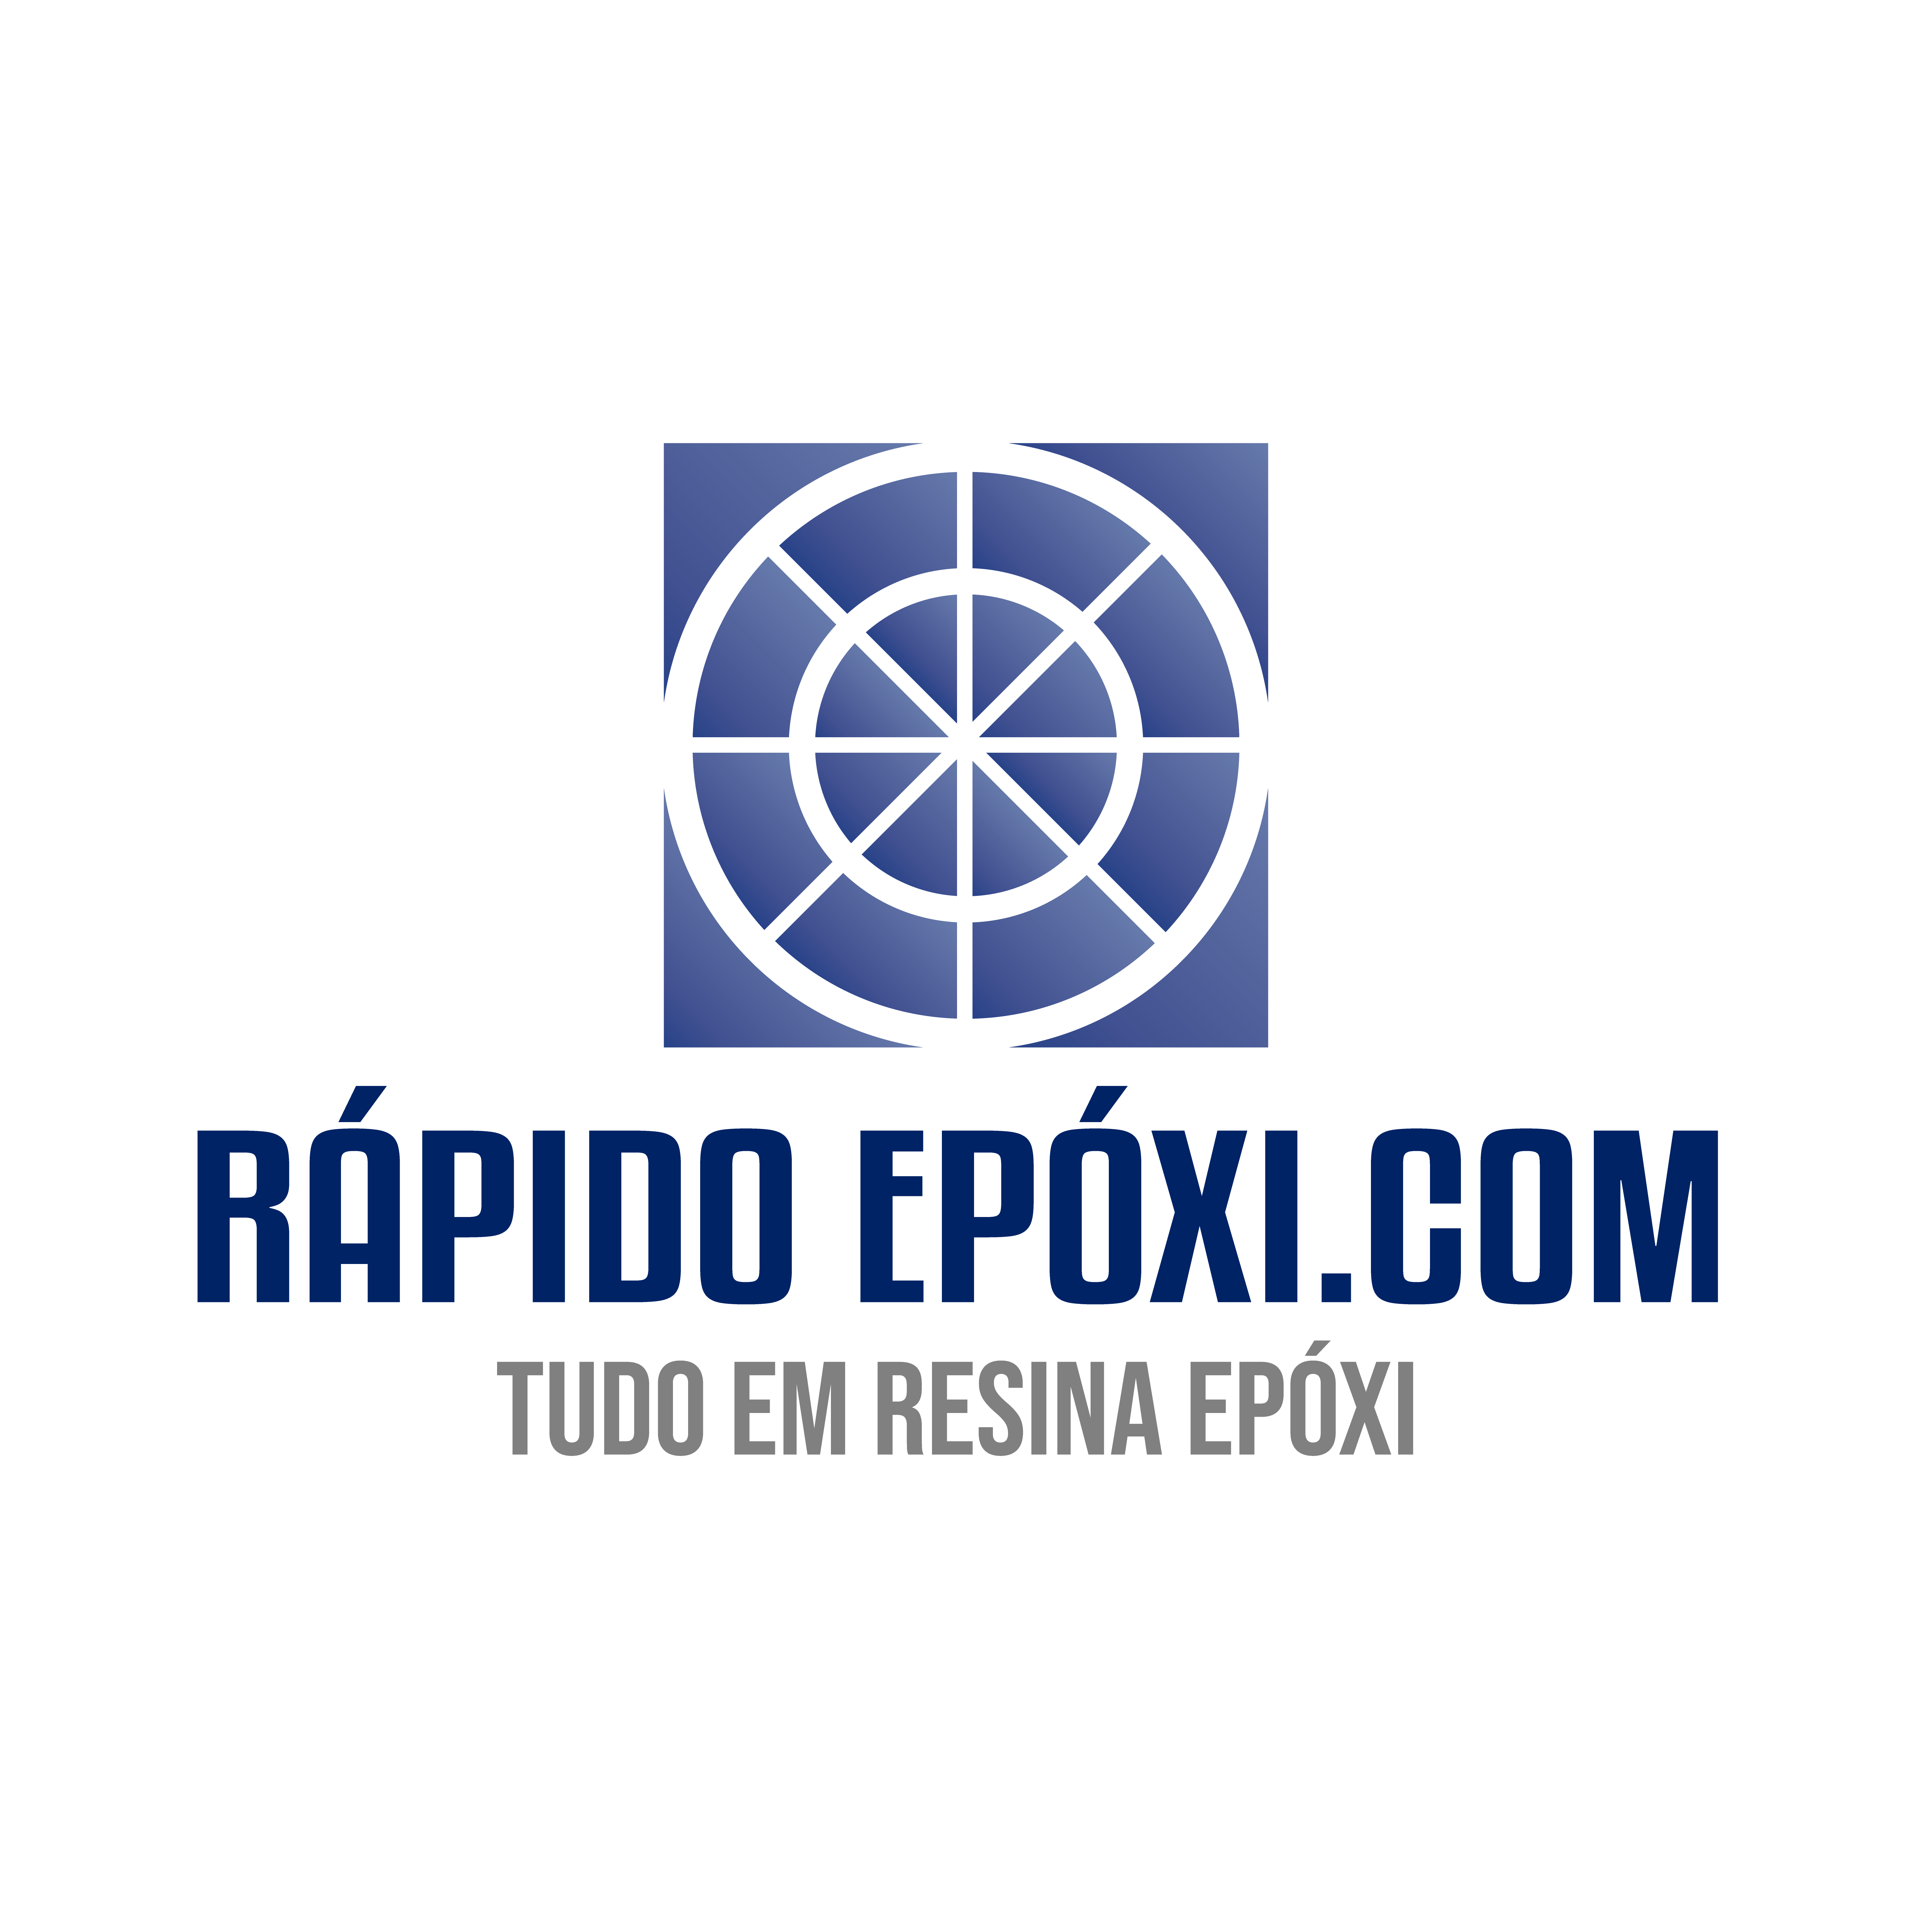 RAPIDOEPOXI.COM